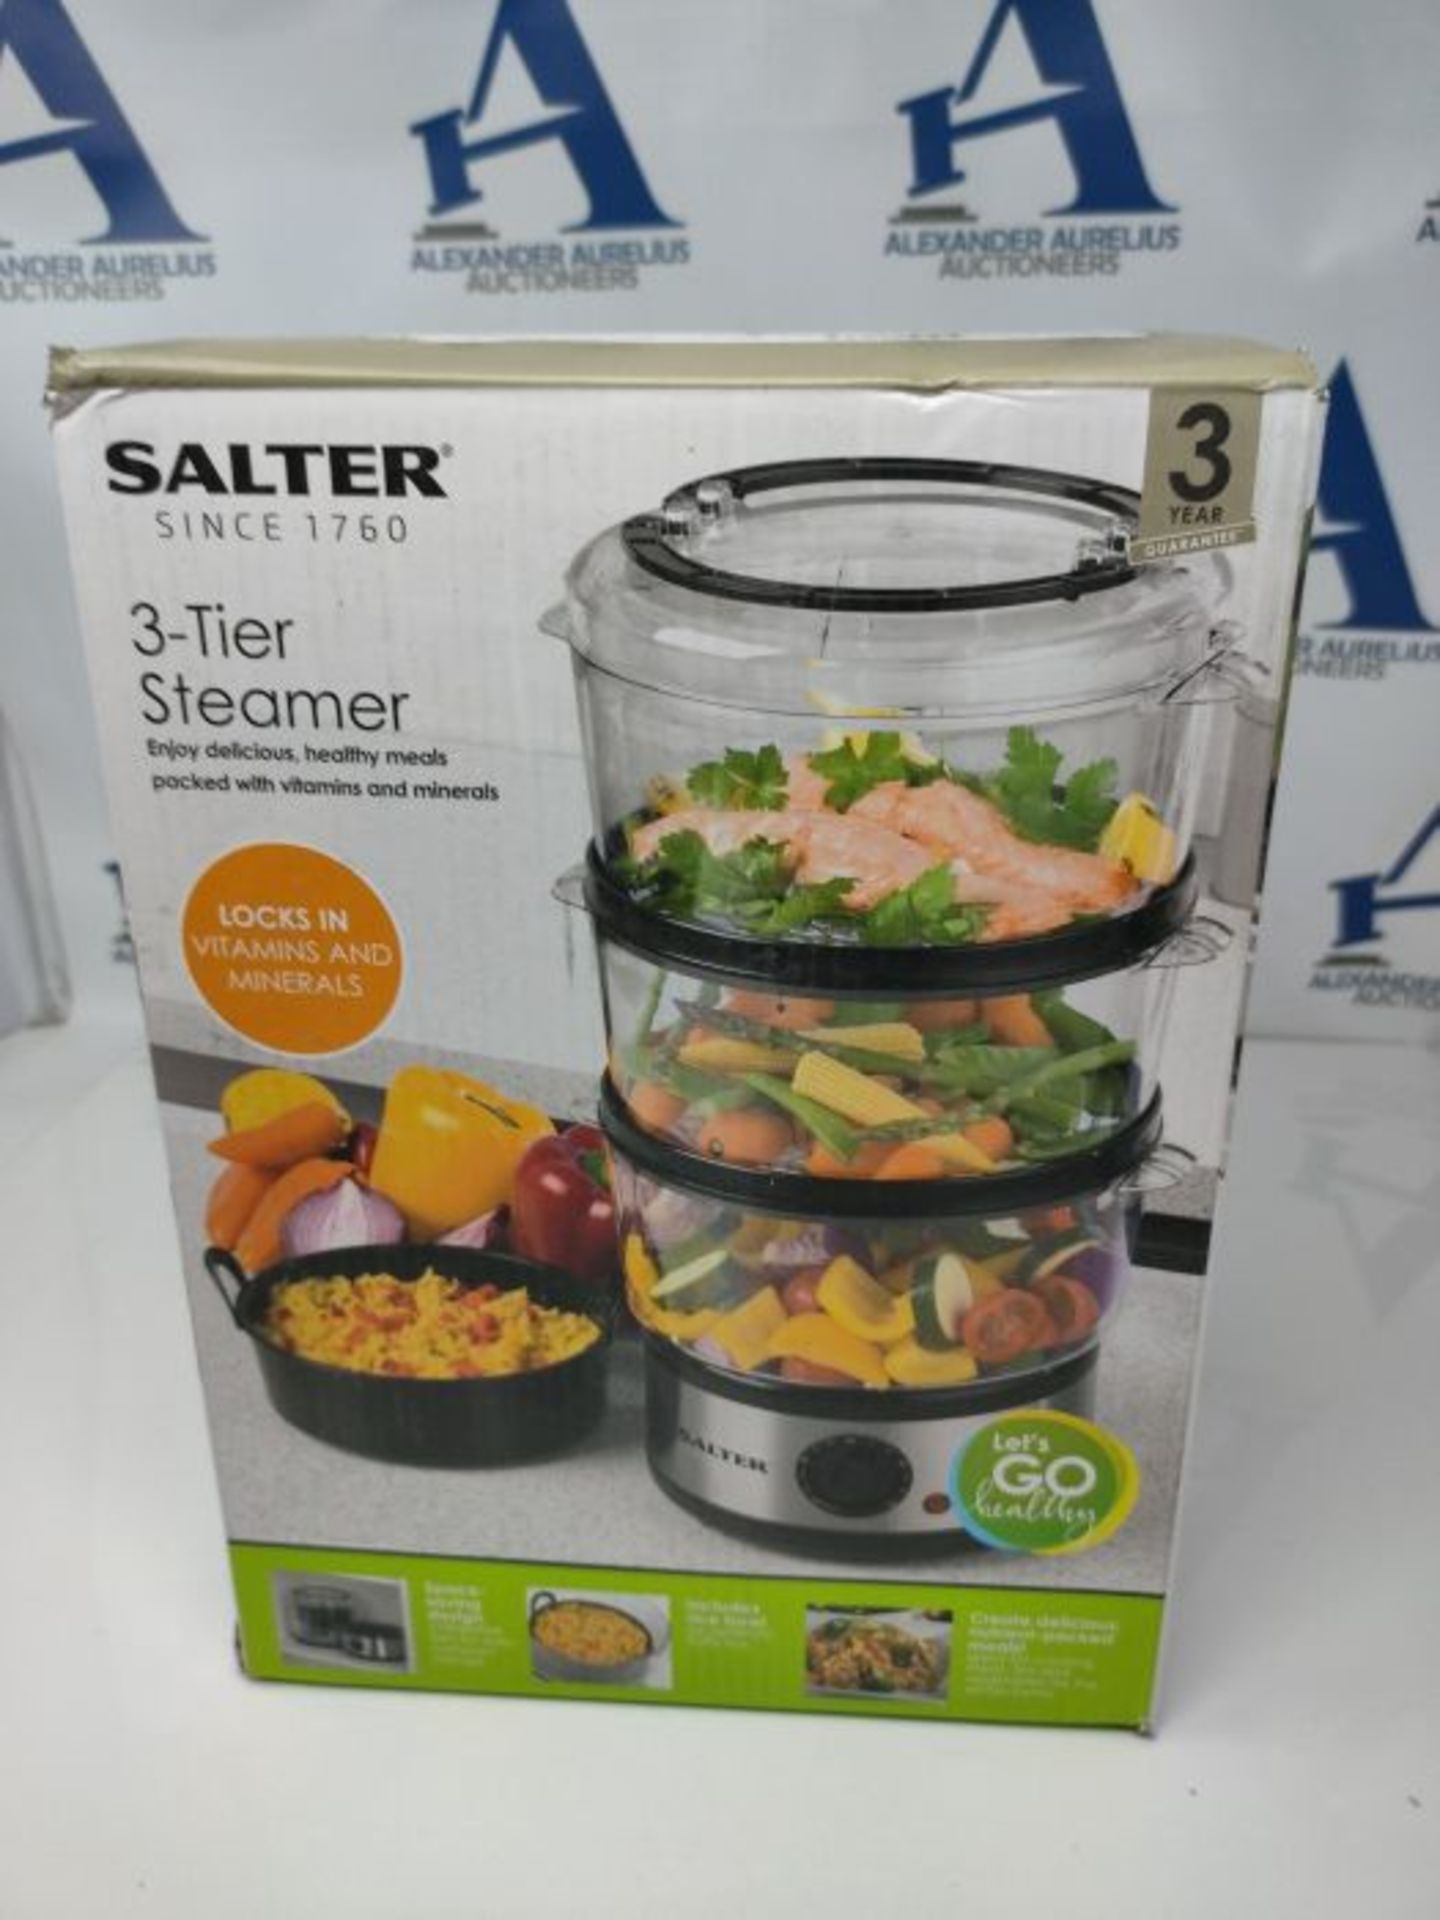 Salter 3-Tier Multi-Cooker Food Steamer - 7.5 Litre Stainless Steel Rice Cooker, 60 Mi - Image 2 of 5